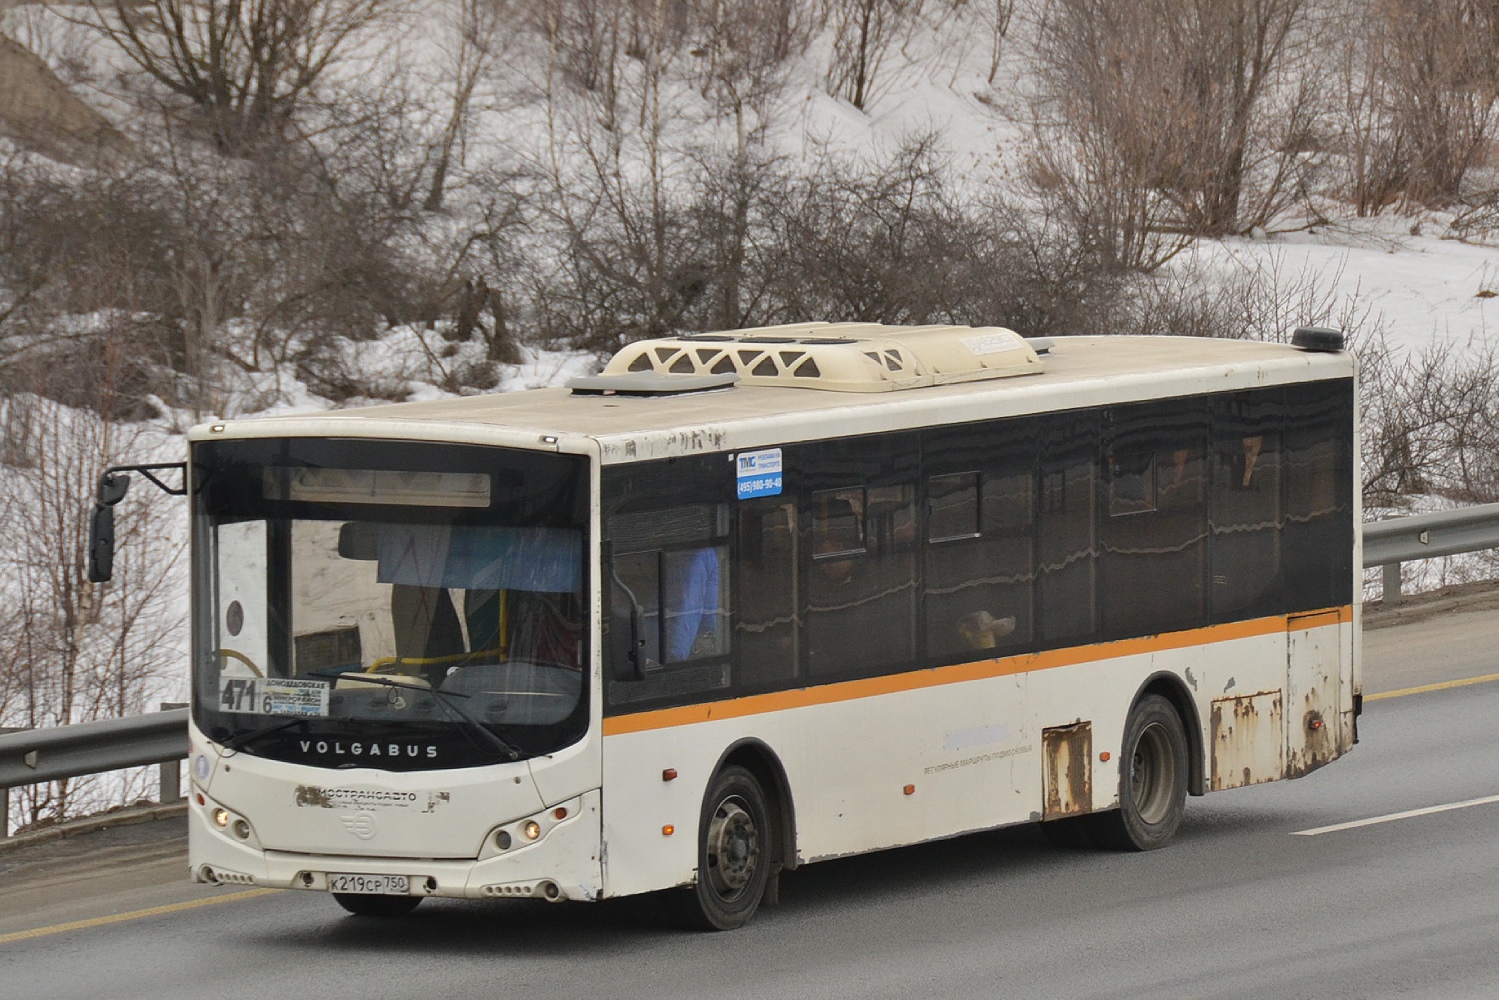 Moscow region, Volgabus-5270.0H # К 219 СР 750